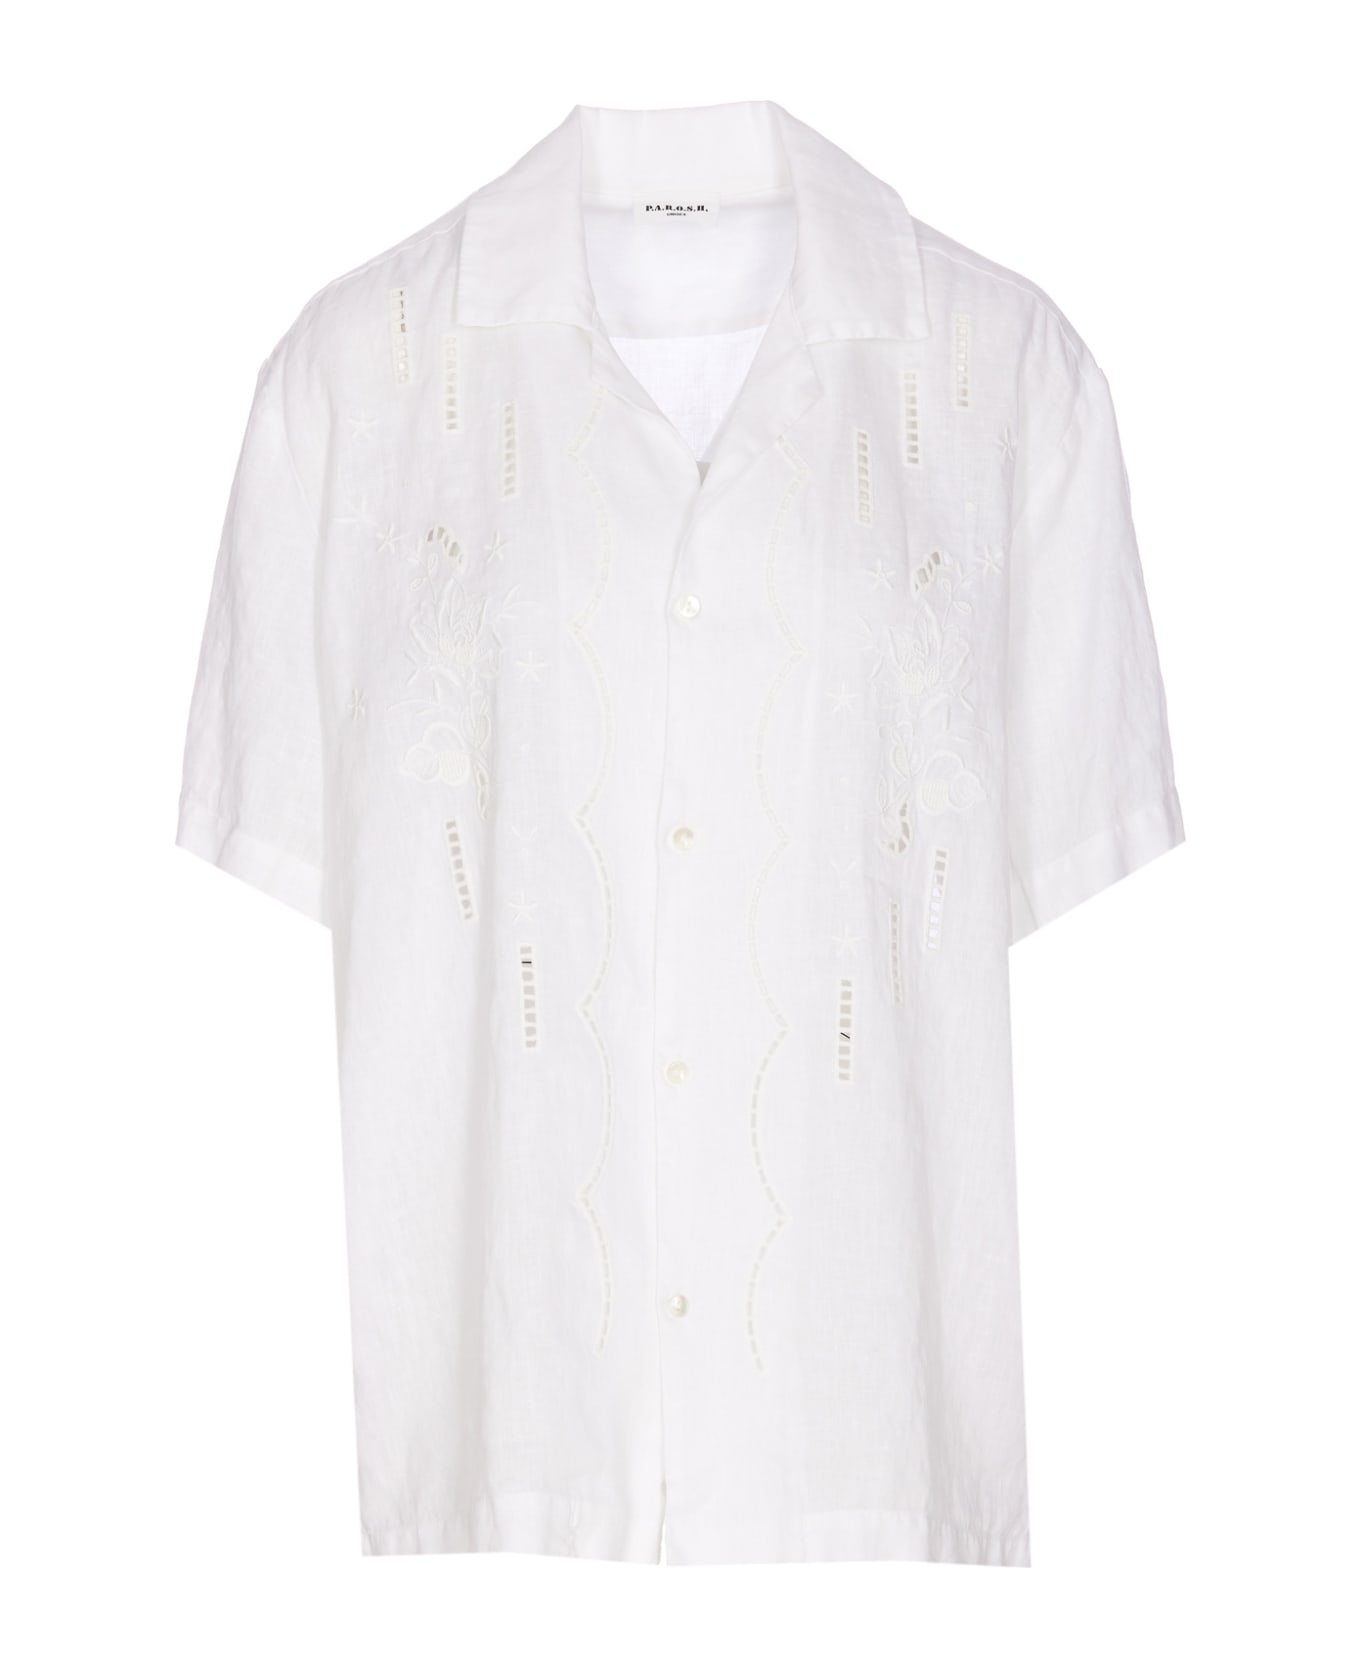 Parosh Beach Shirt - White